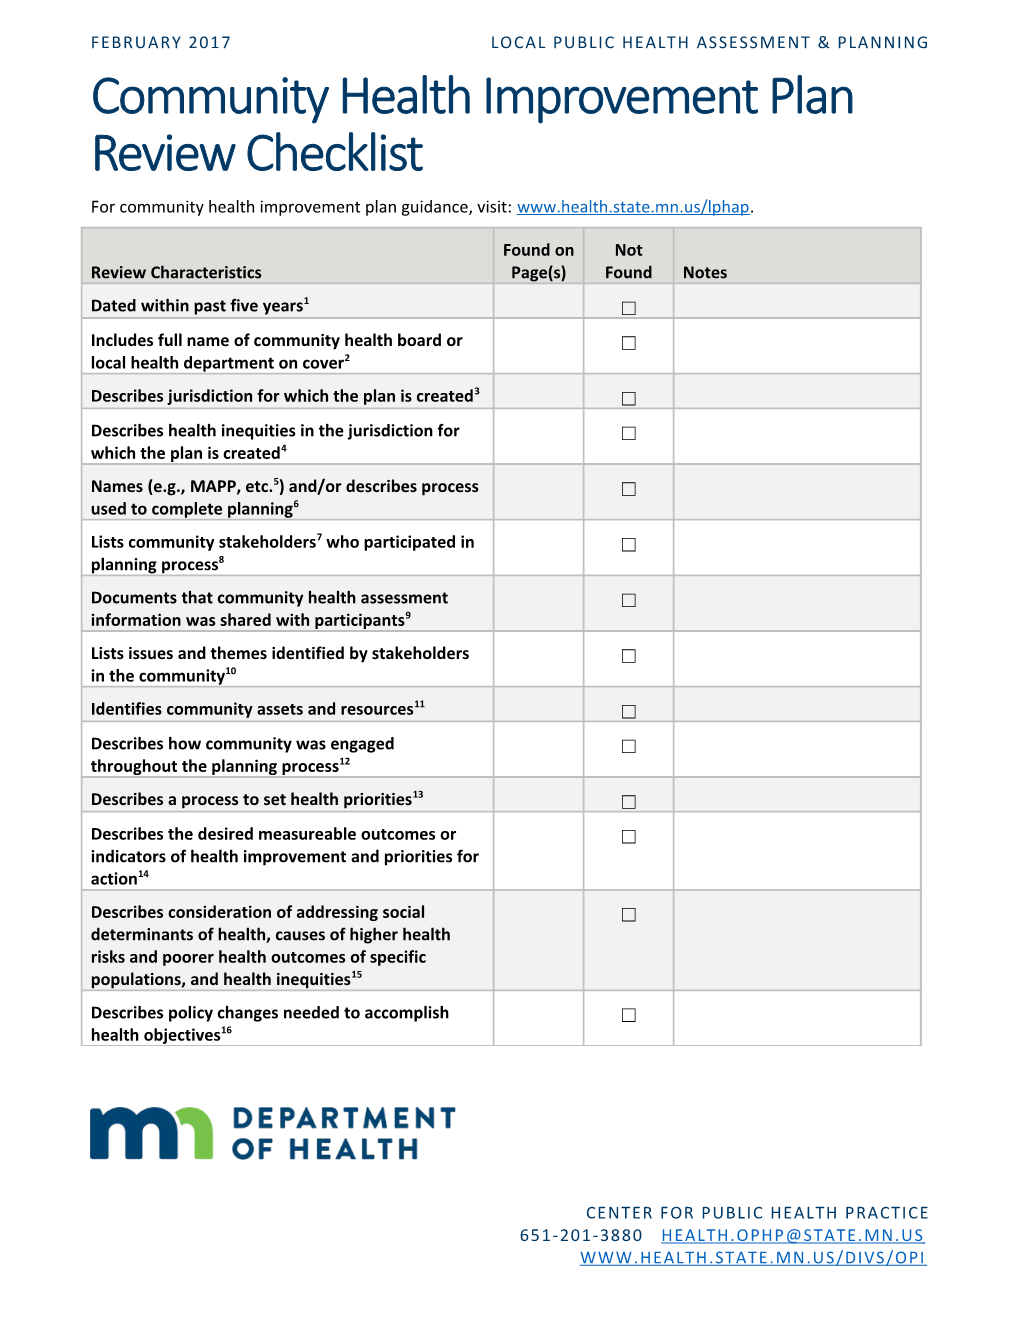 Community Health Improvement Plan Review Checklist